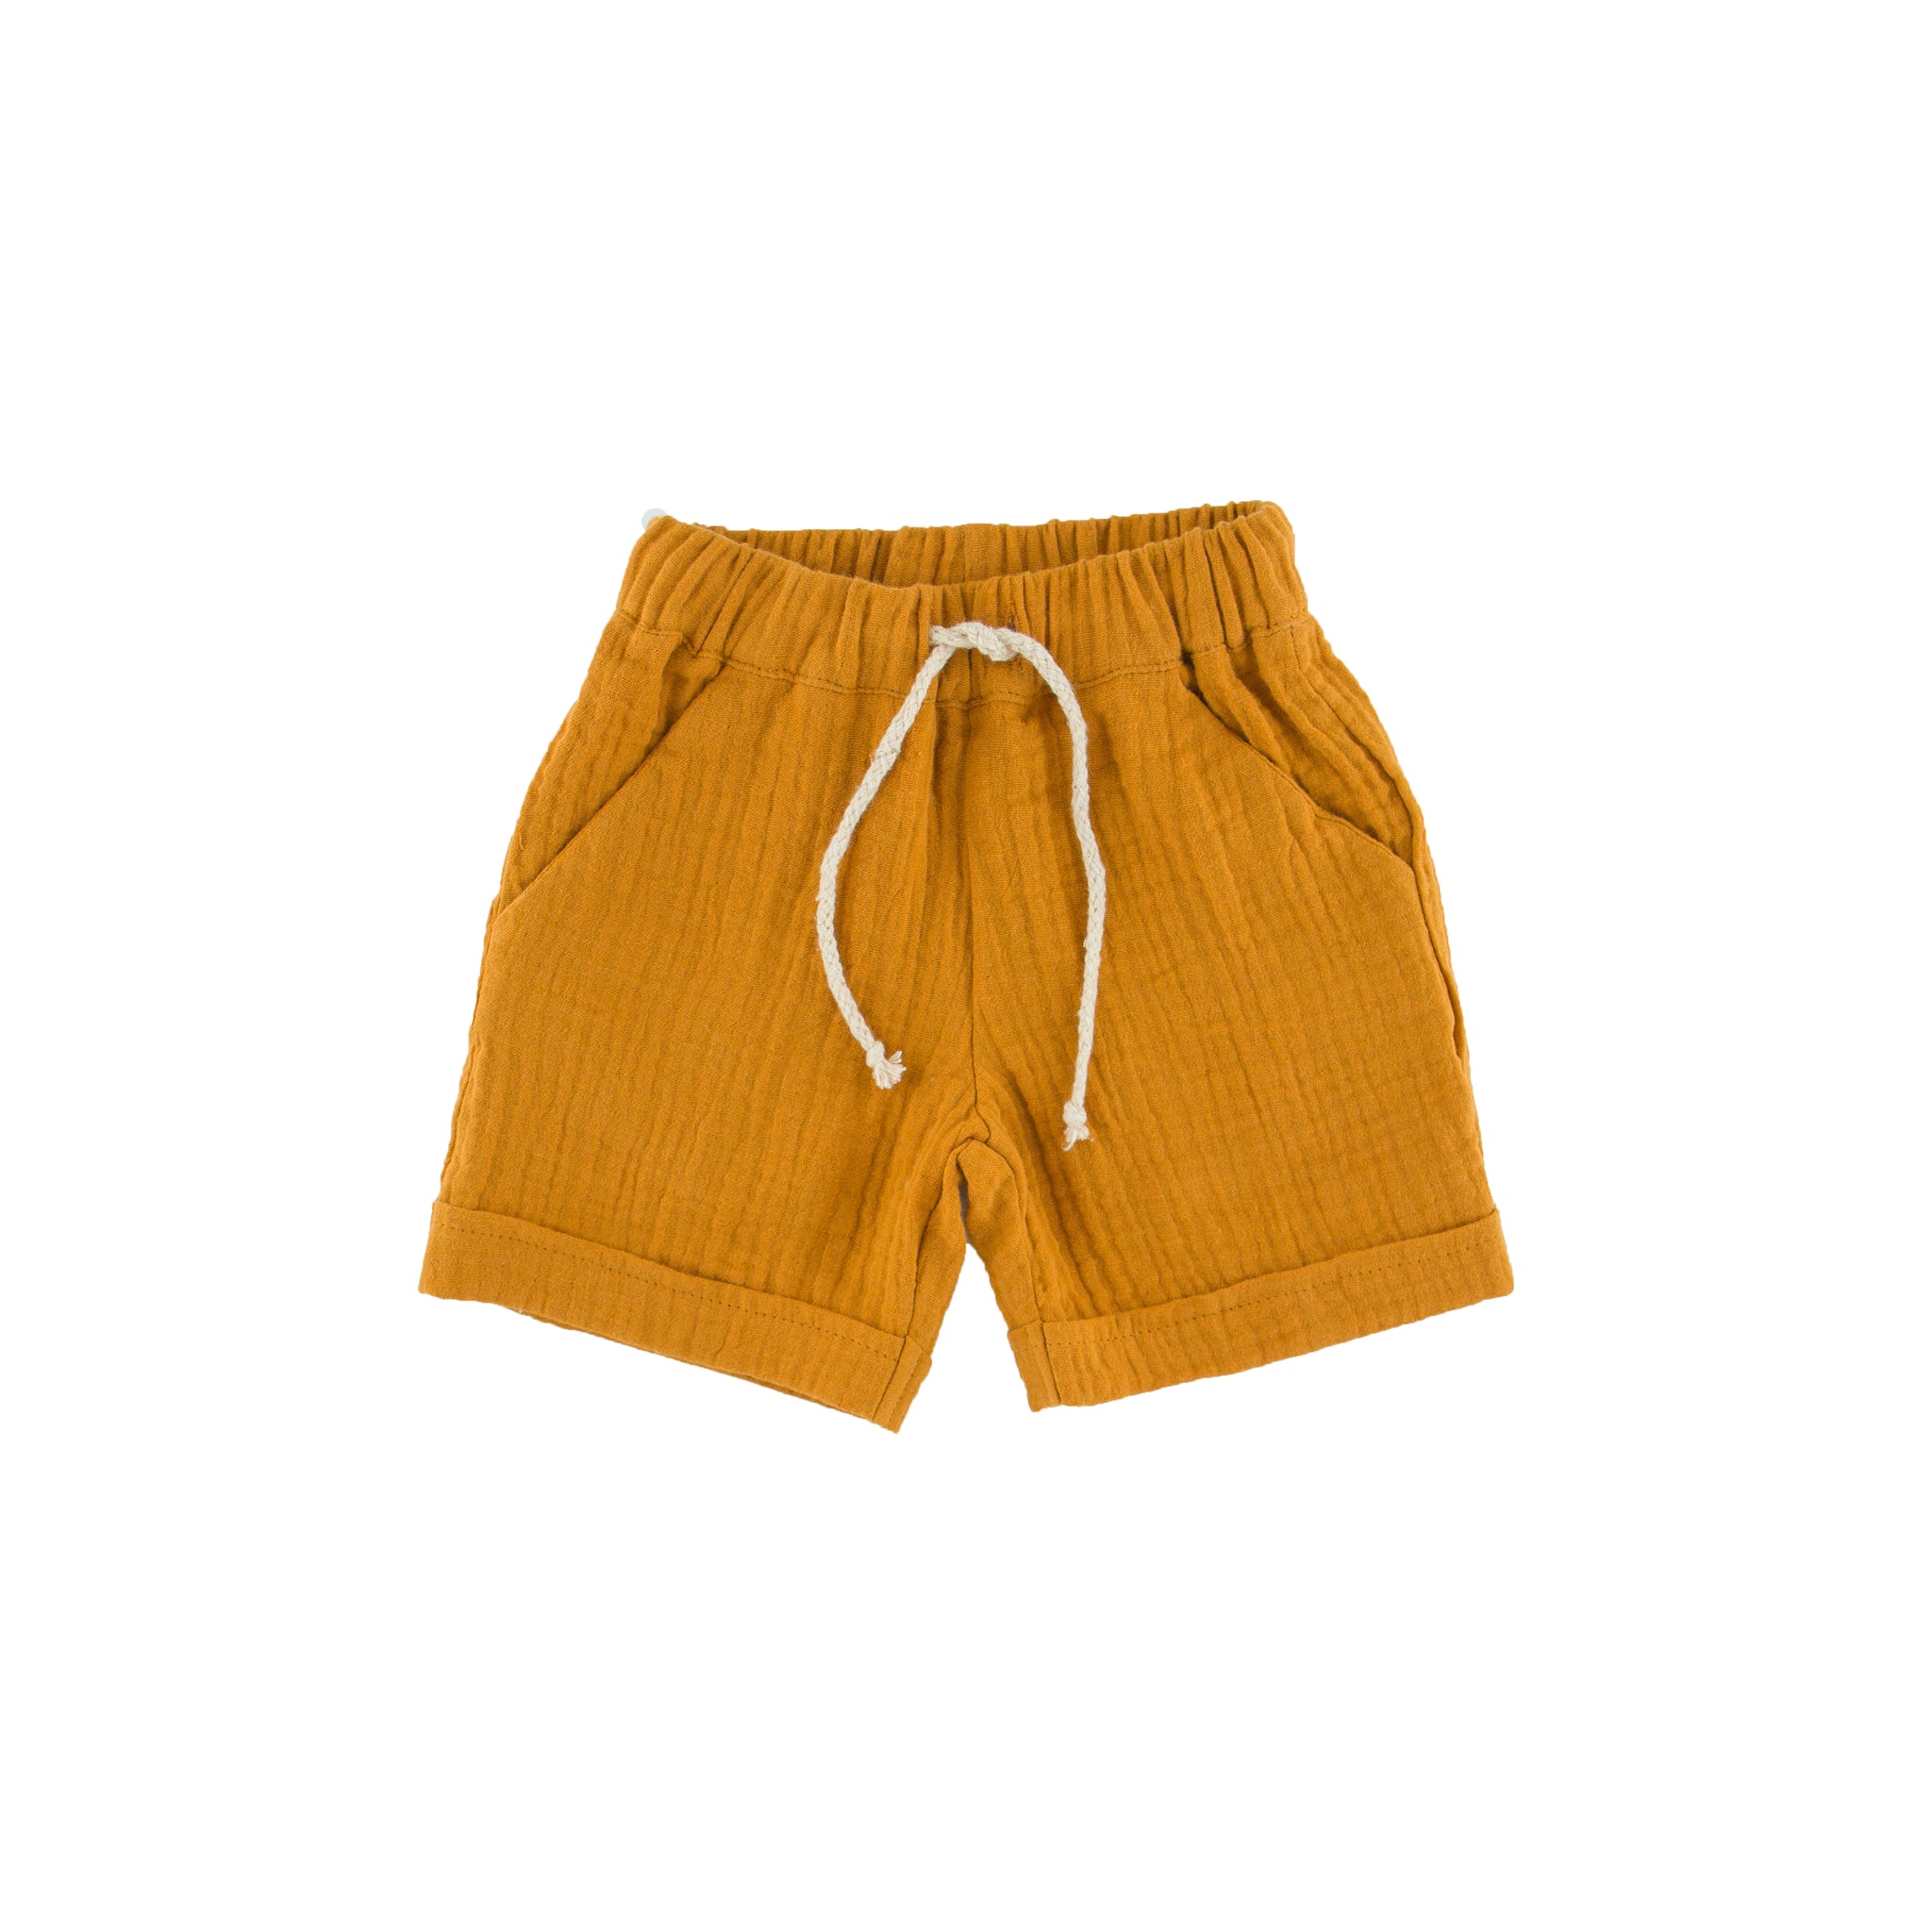 Julian shorts - mustard